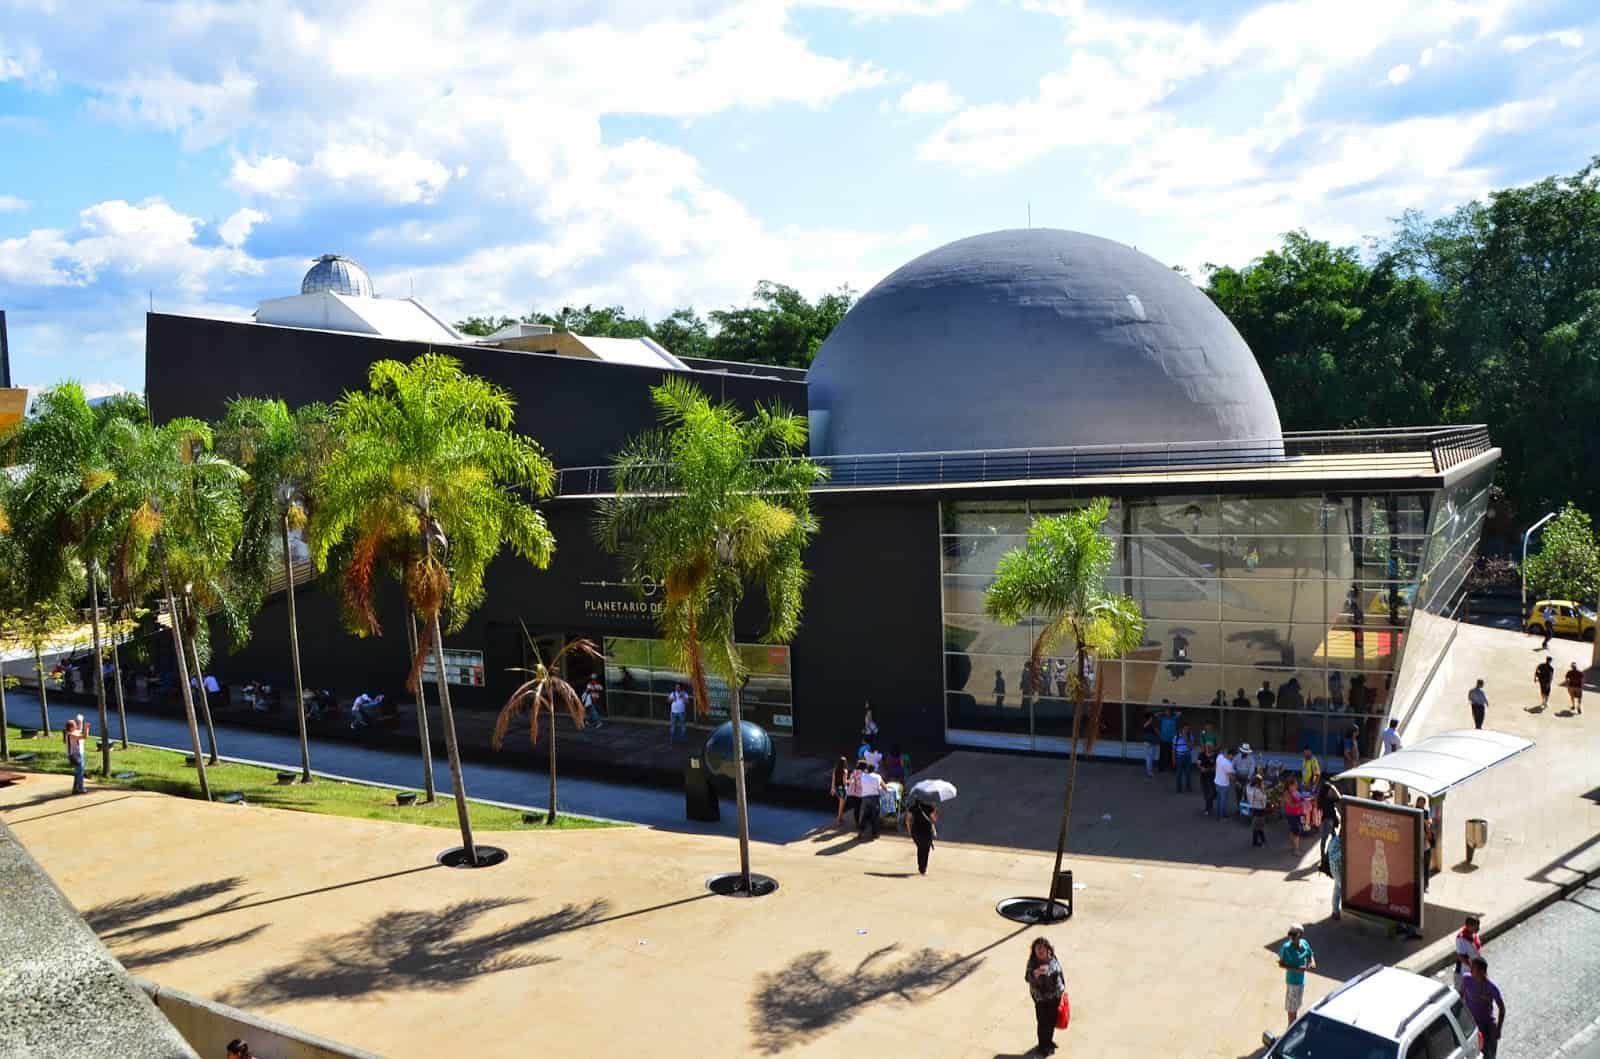 Medellín Planetarium in Aranjuez, Medellín, Antioquia, Colombia